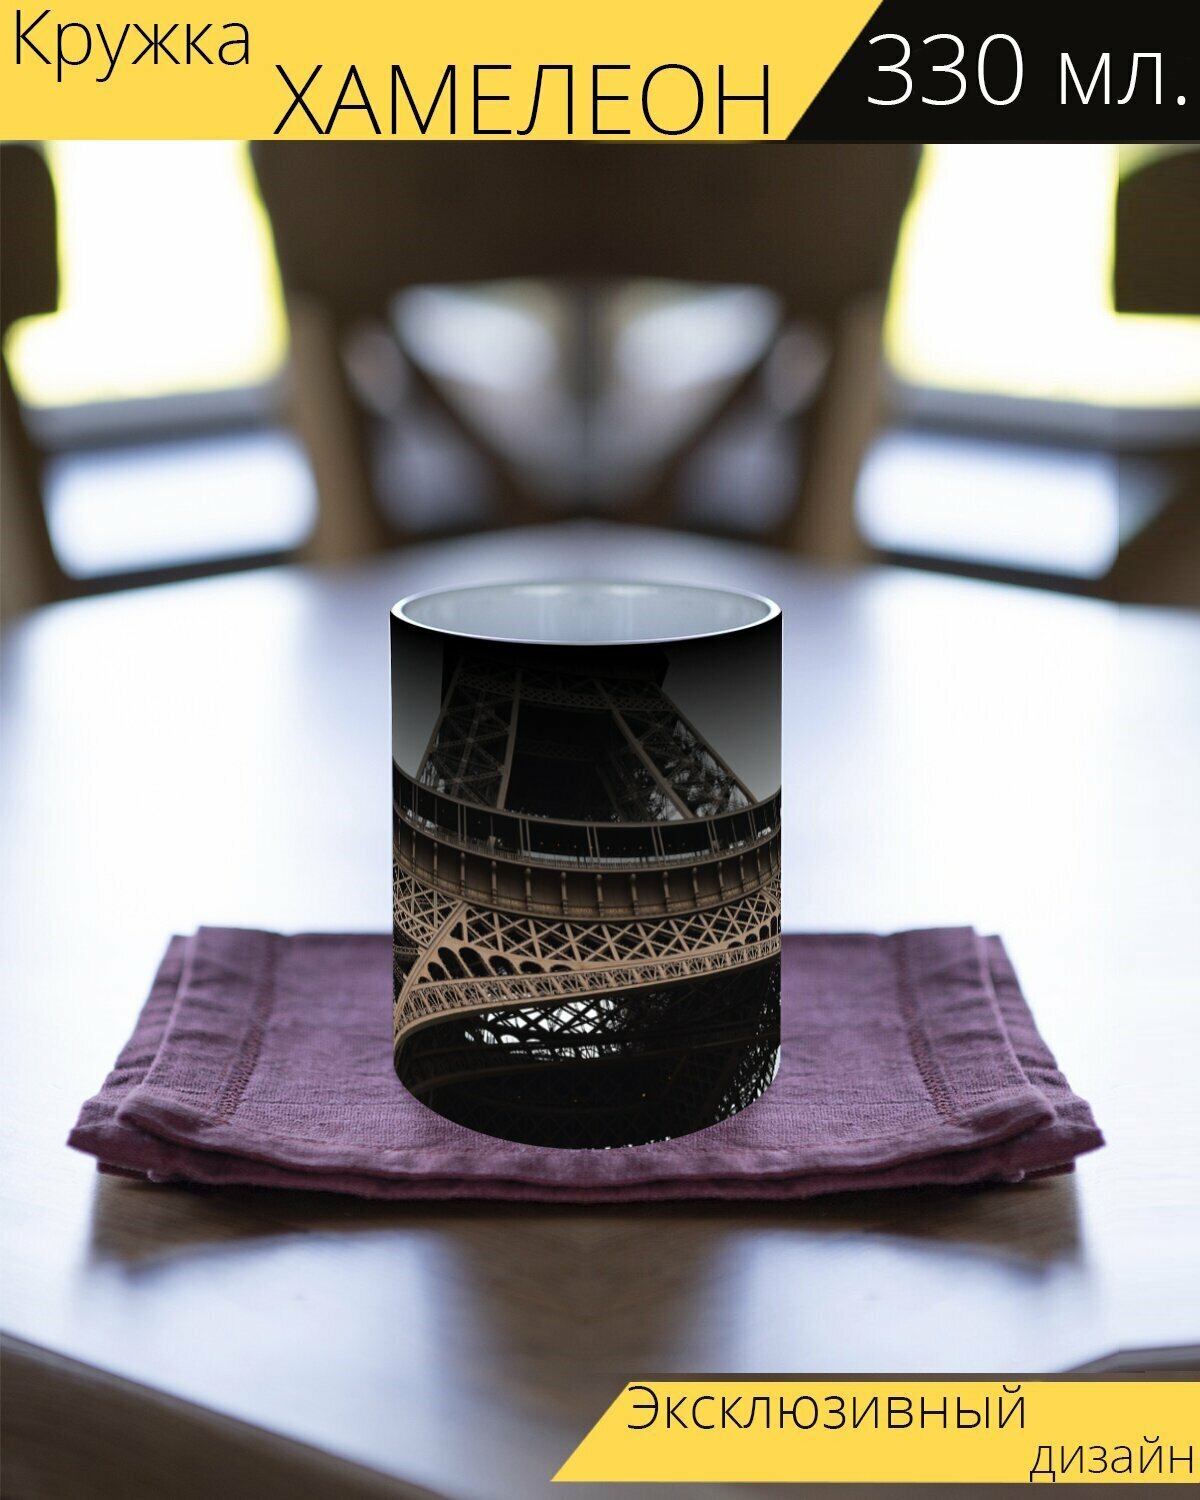 Кружка хамелеон с принтом "Париж, эйфелева башня, архитектуры" 330 мл.